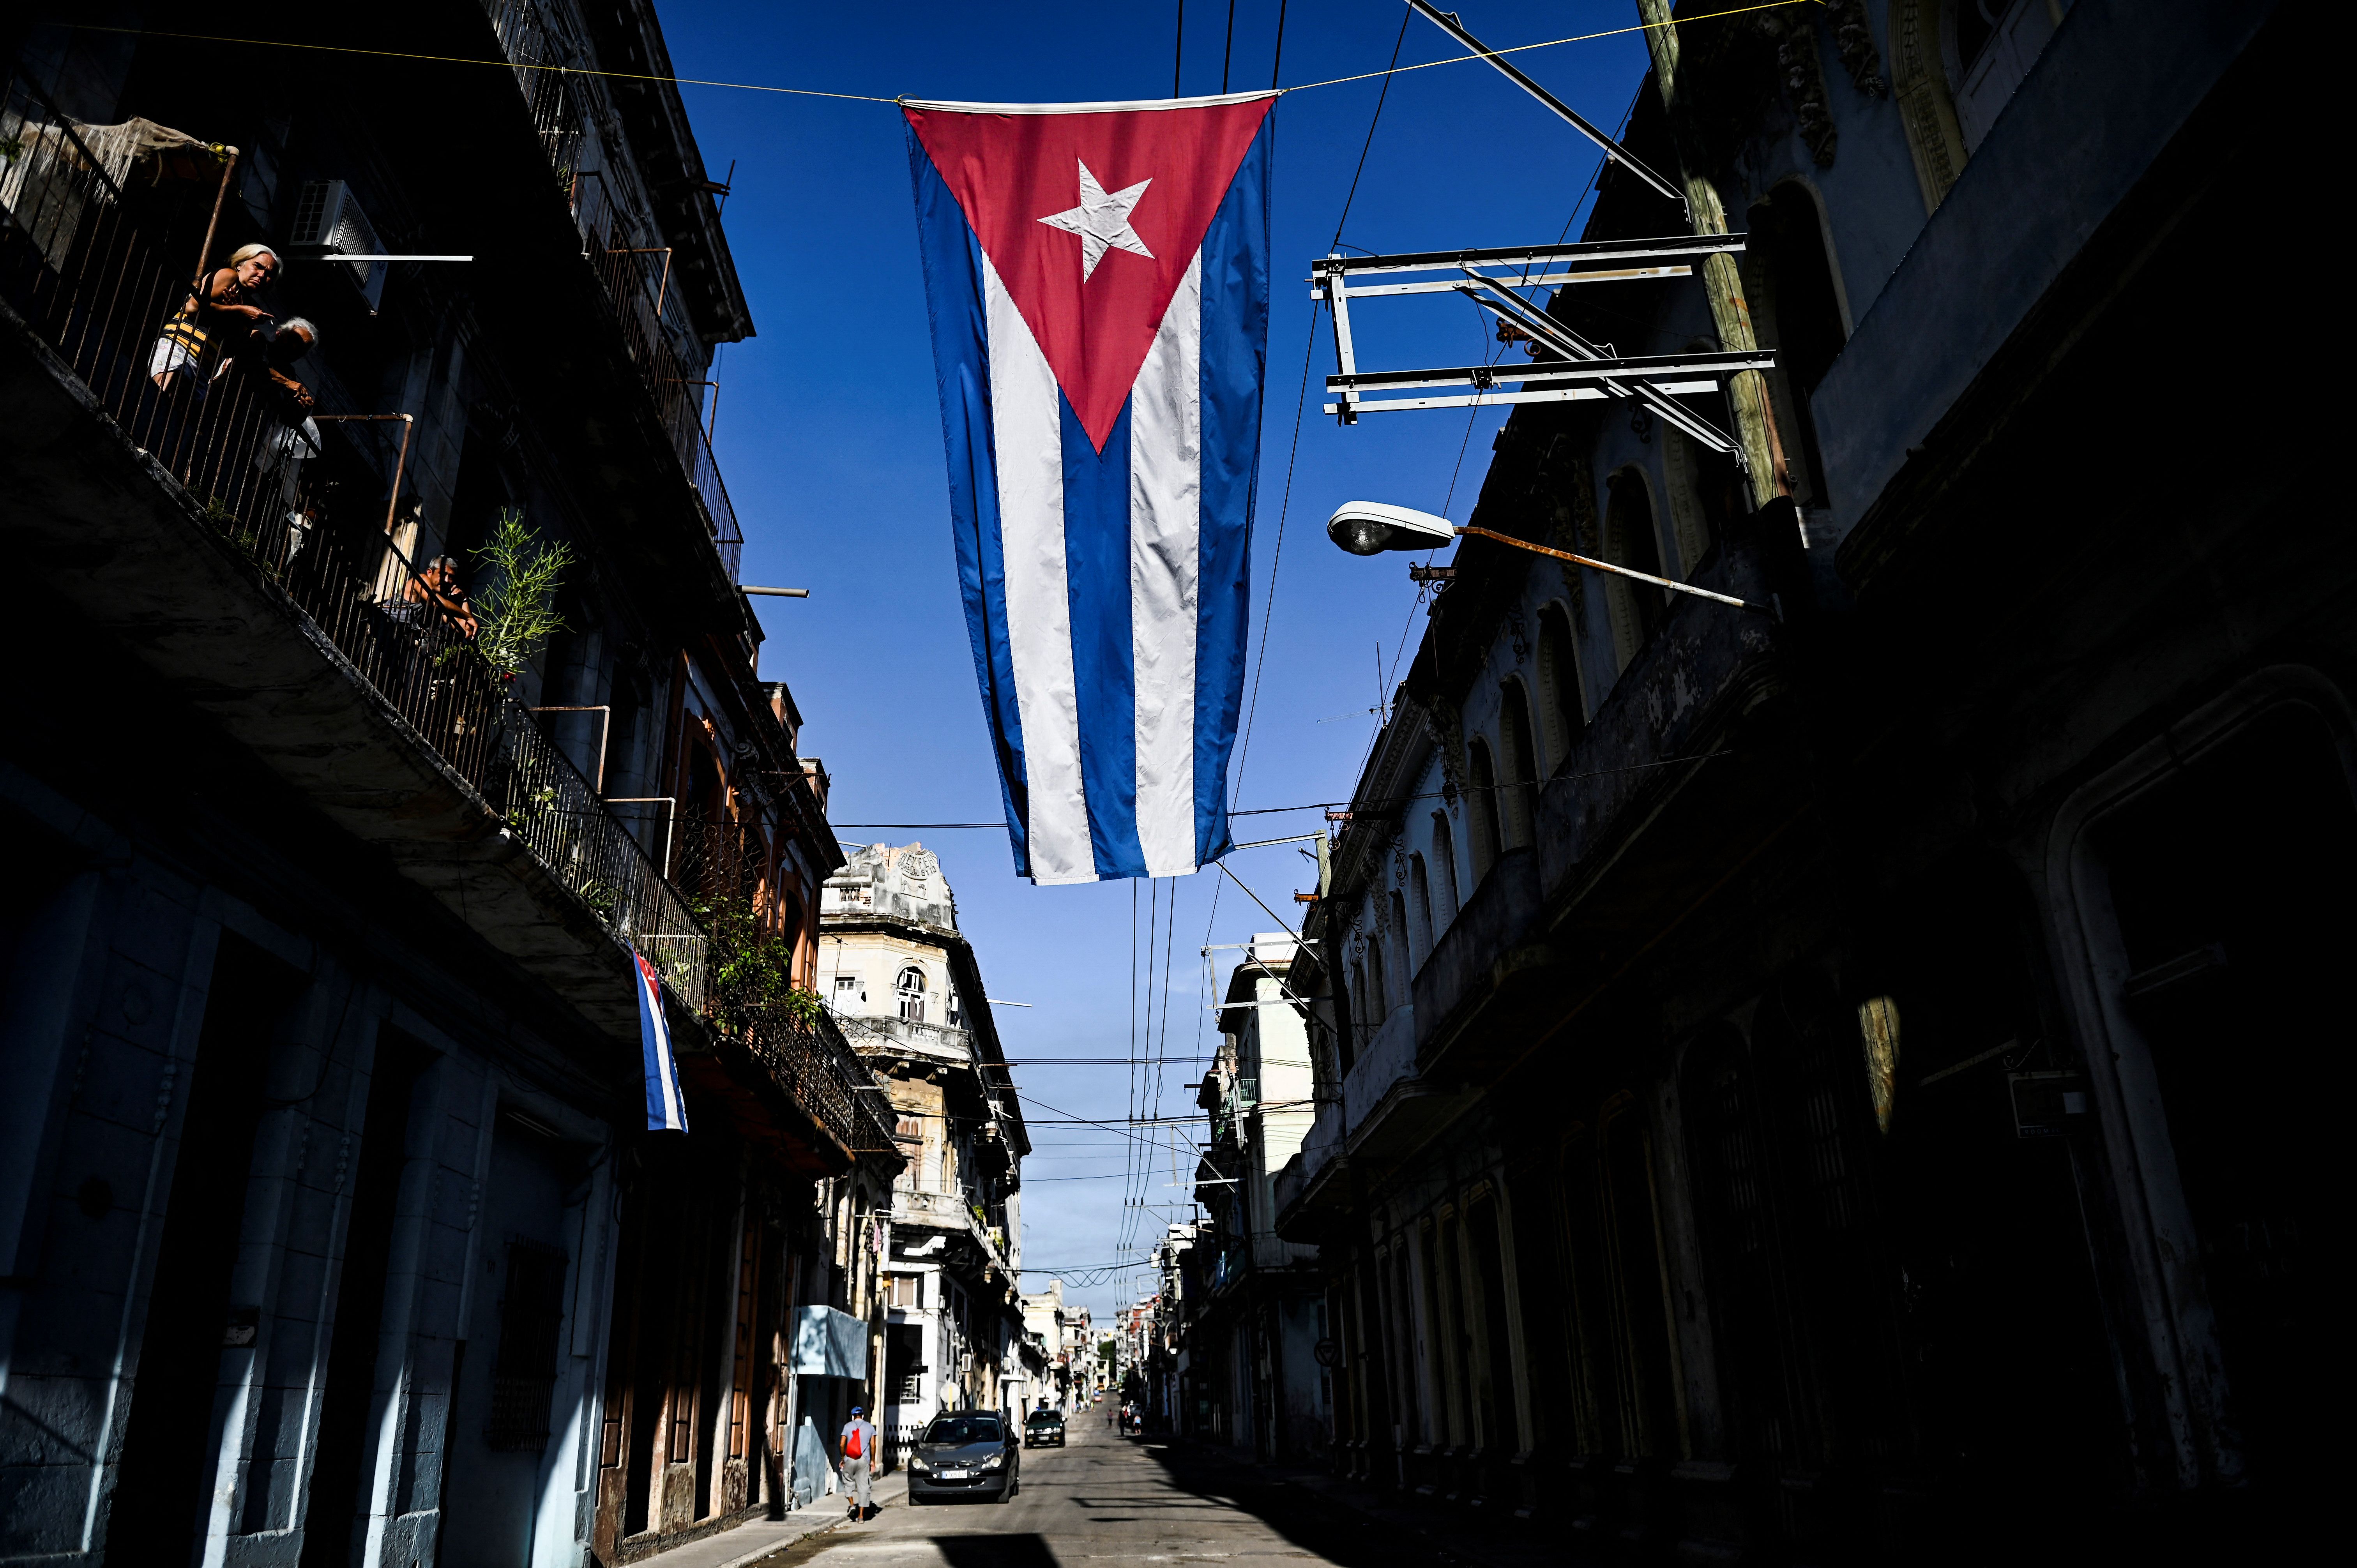 A cuban flag hangs above a street in Havana, Cuba, on August 19, 2021.